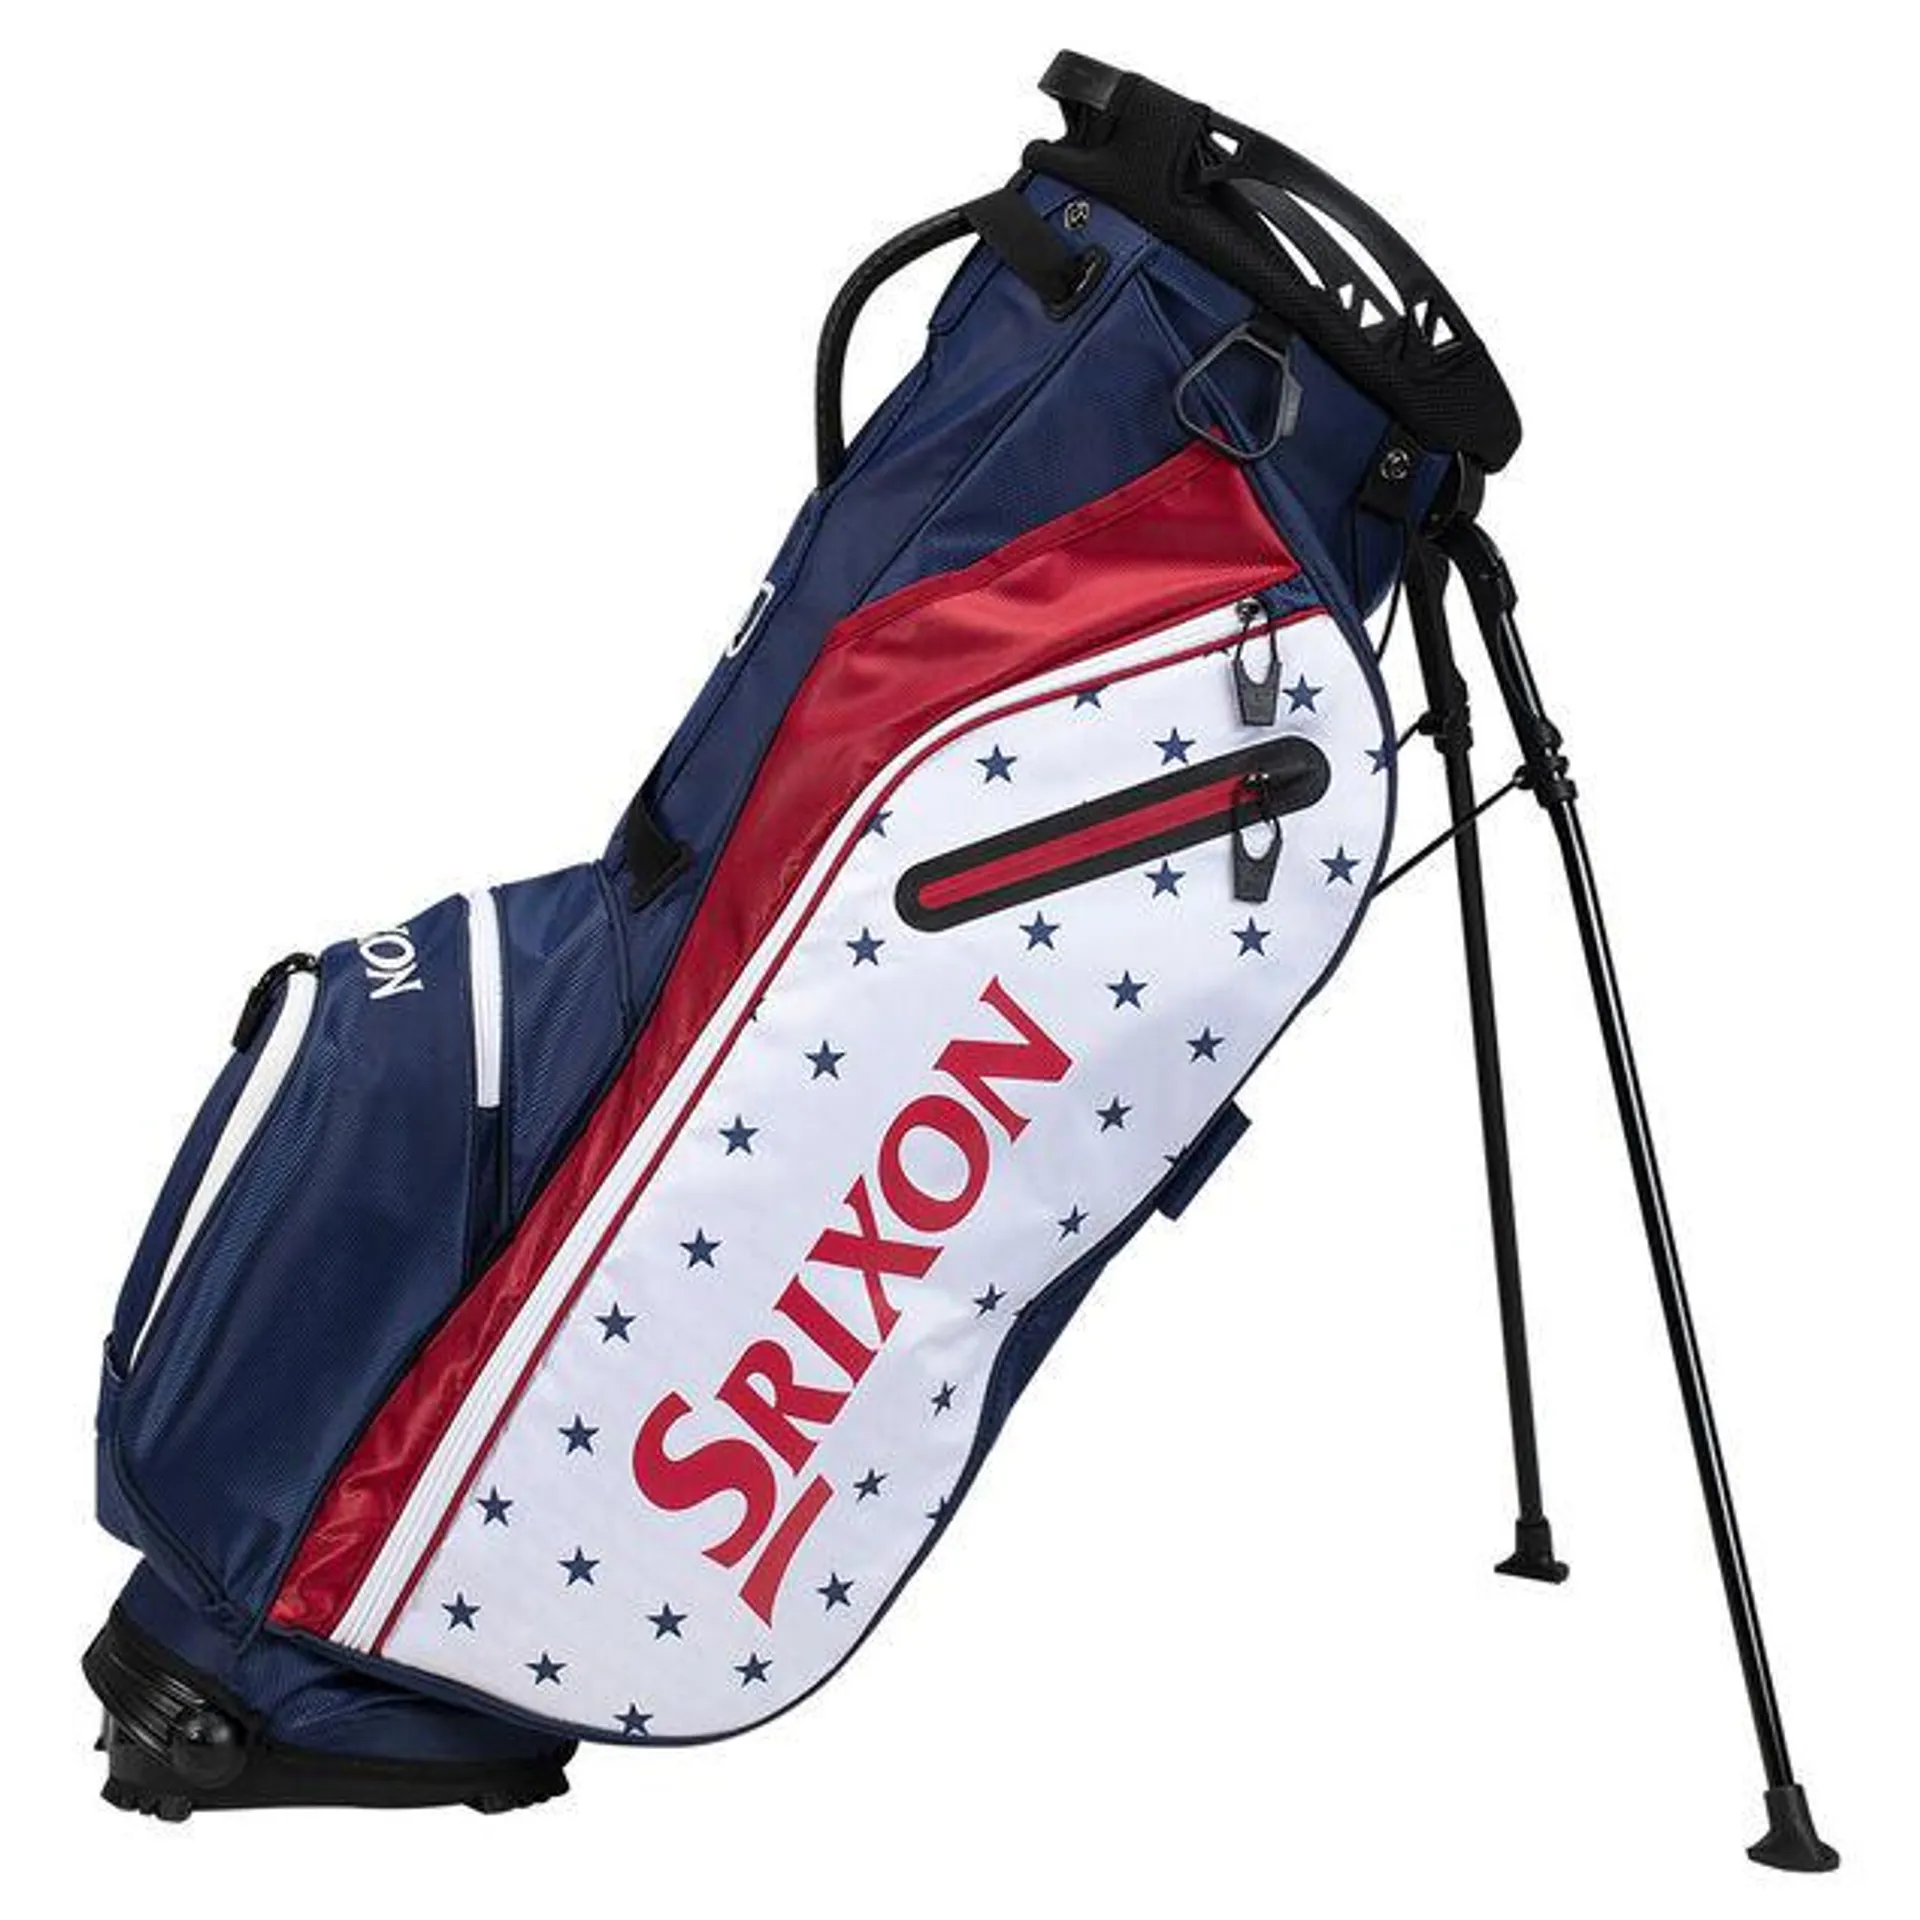 Srixon Limited-Edition U.S. Open Tour Golf Stand Bag